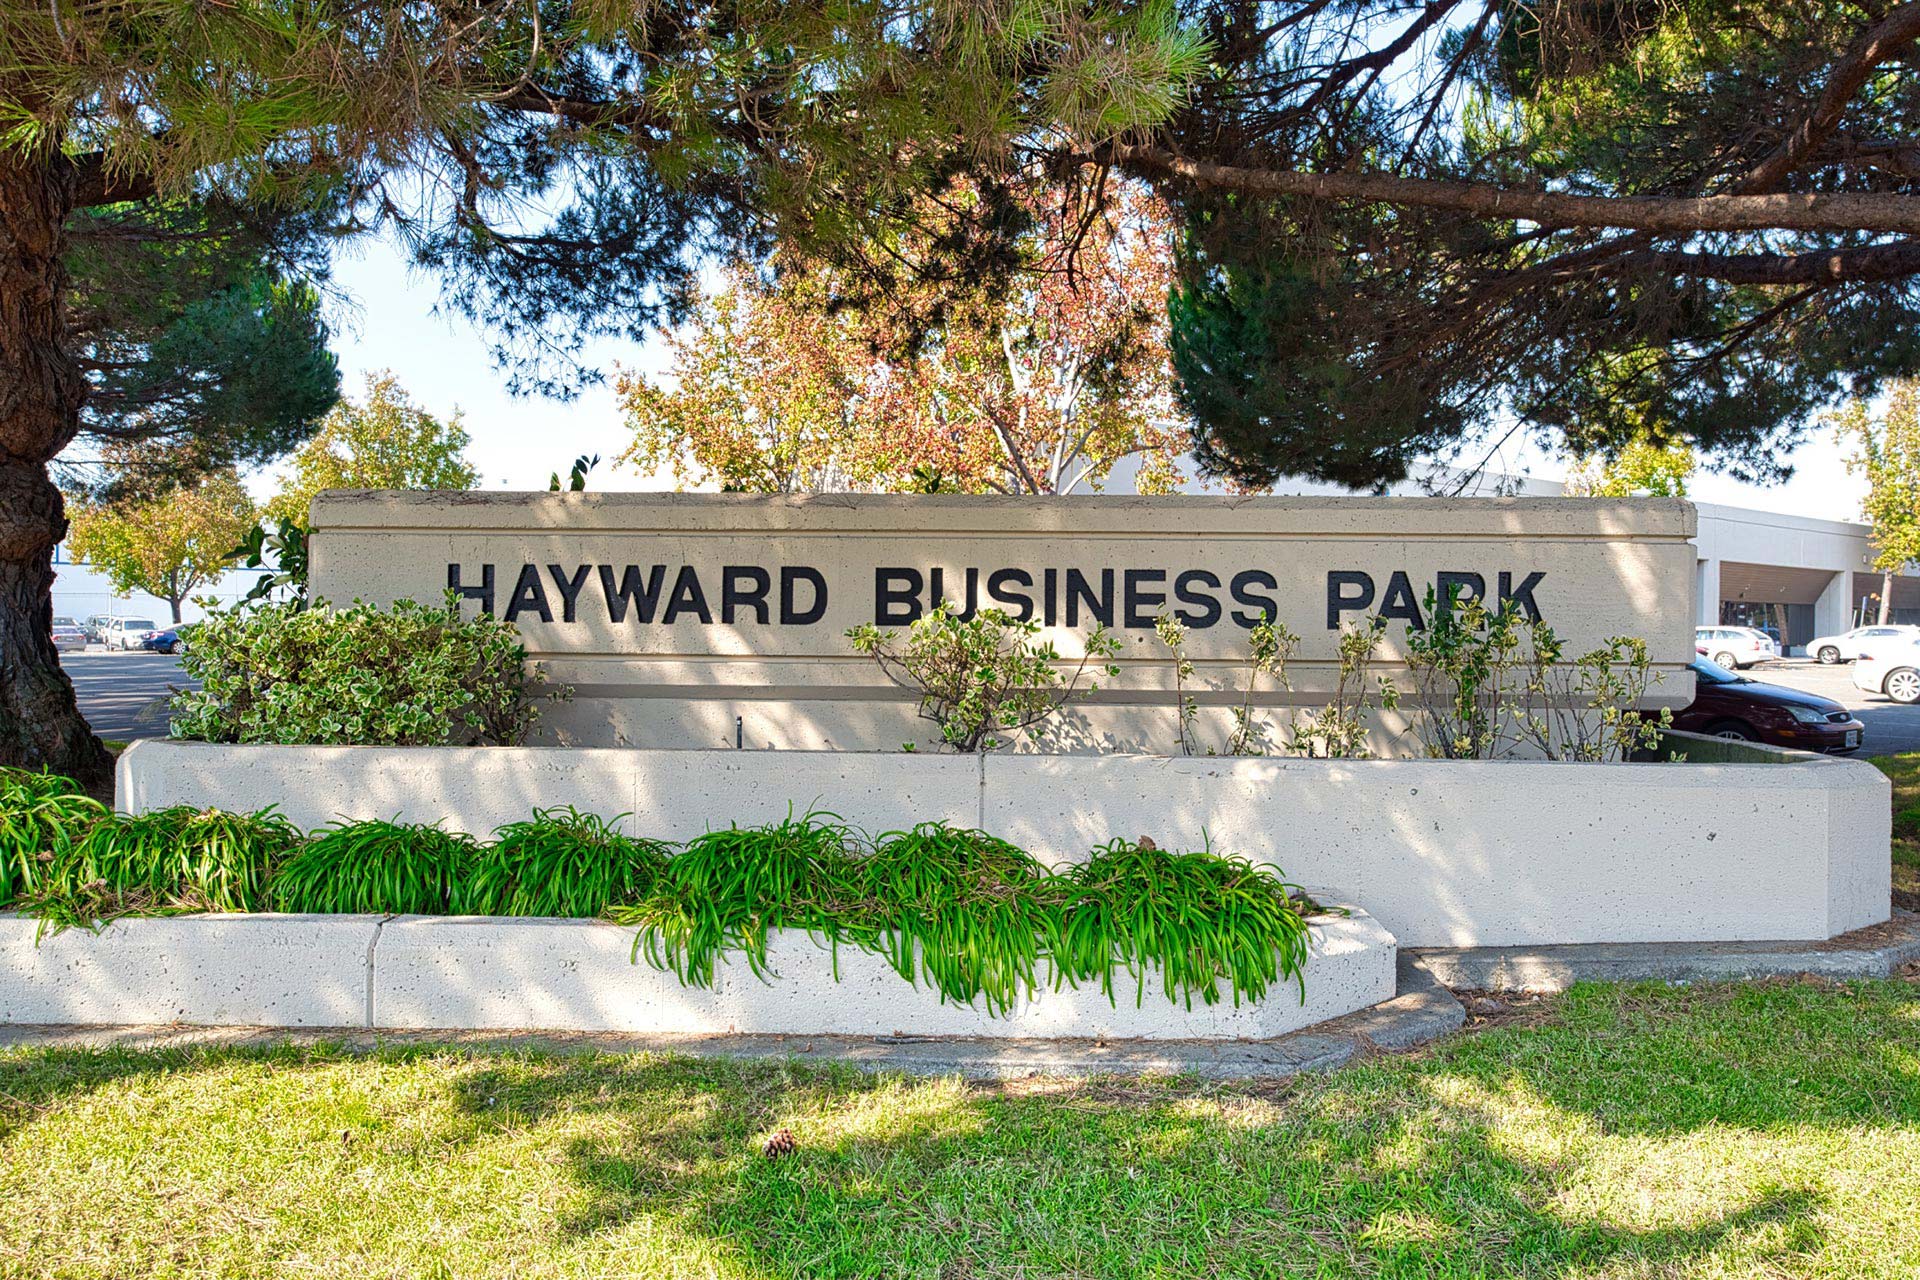 Hayward Business Park exterior entrance sign photo